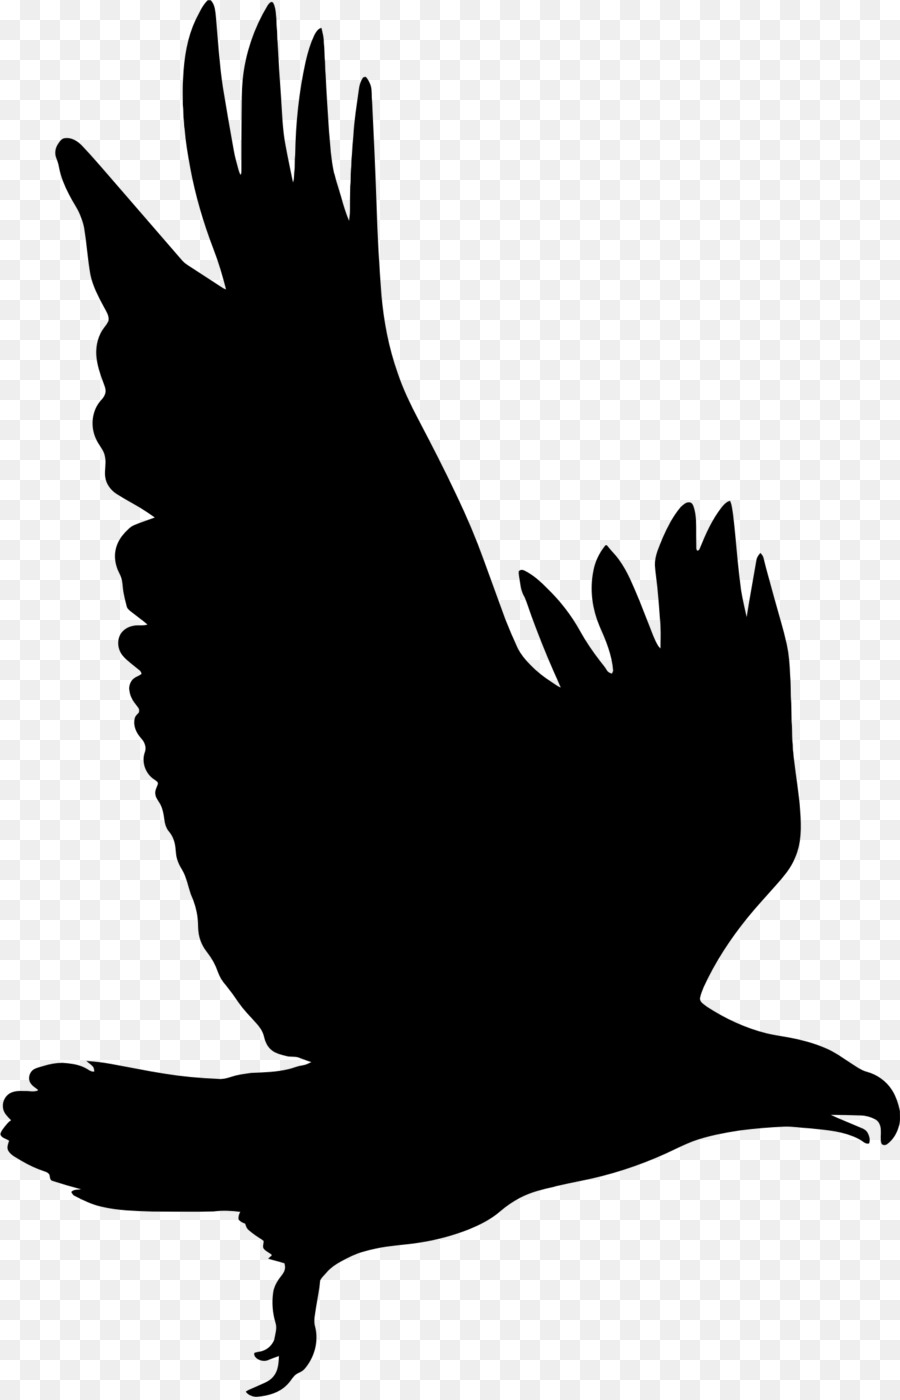 Silhouette Eagle Clip art - eagle png download - 1491*2314 - Free Transparent Silhouette png Download.